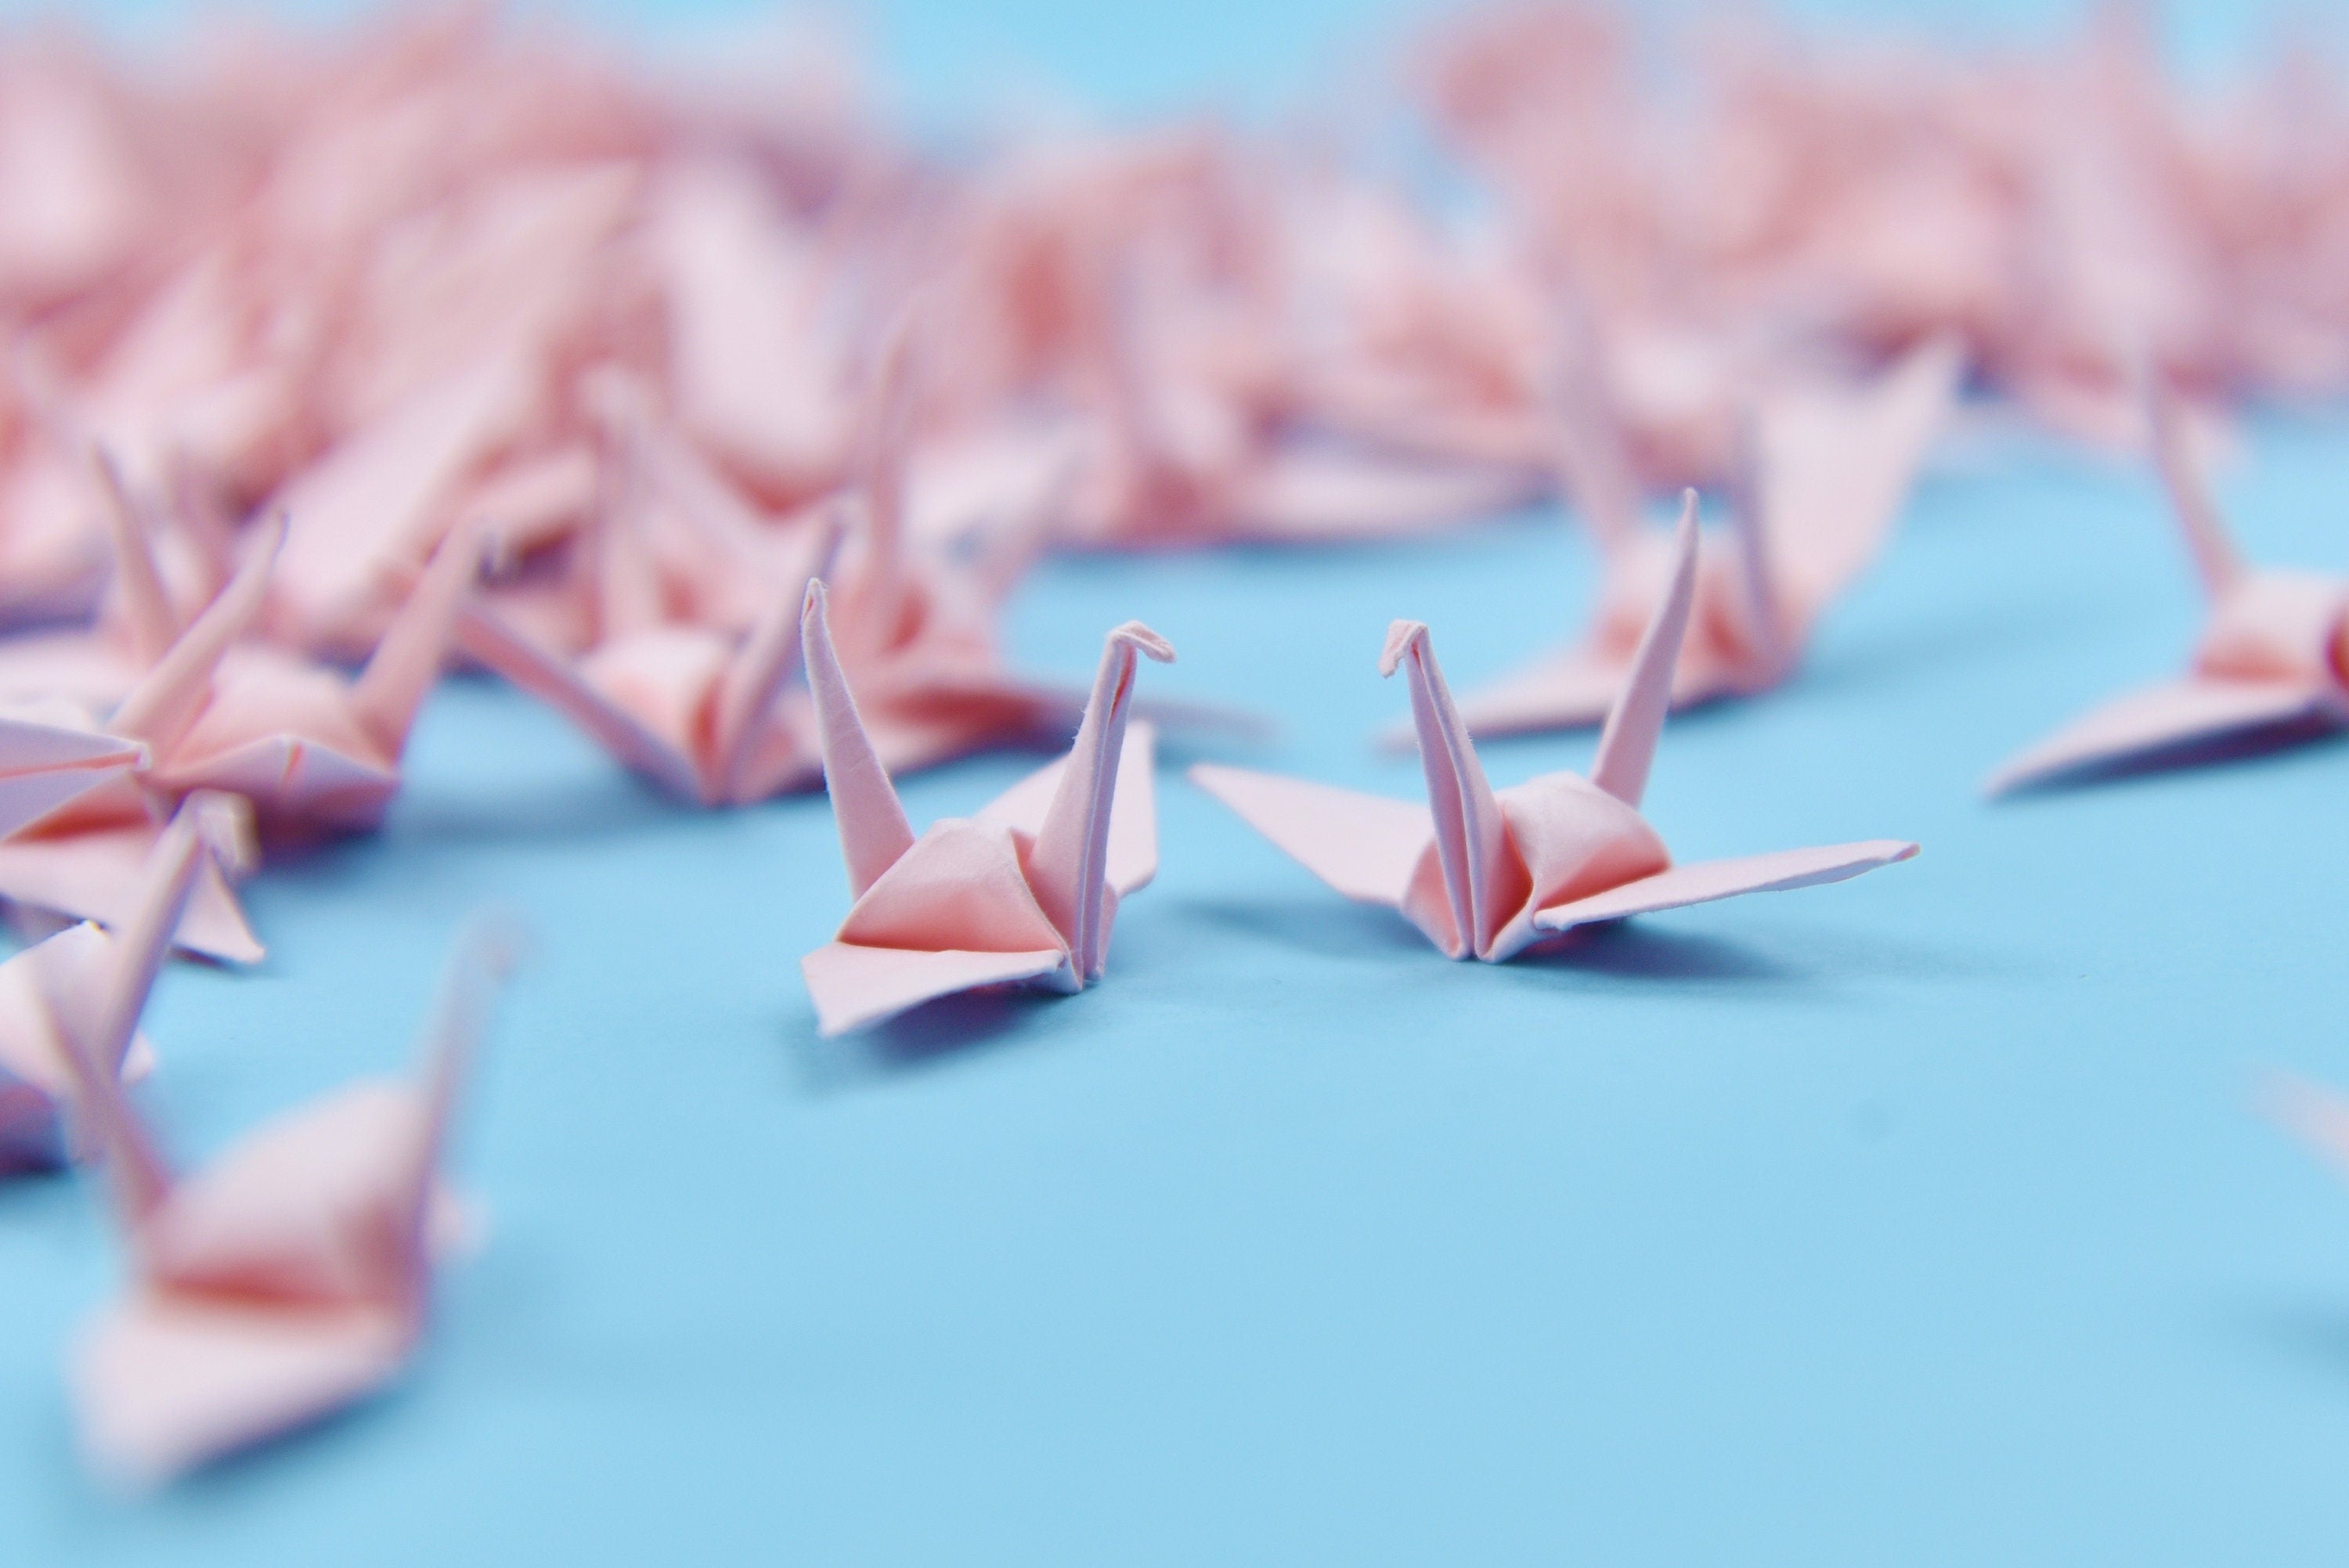 100 Grúas de papel Origami - Rosa rosa - Pequeñas 3,81 cm (1,5 pulgadas) - Grúas de origami prefabricadas para adornos, Navidad, decoración de bodas